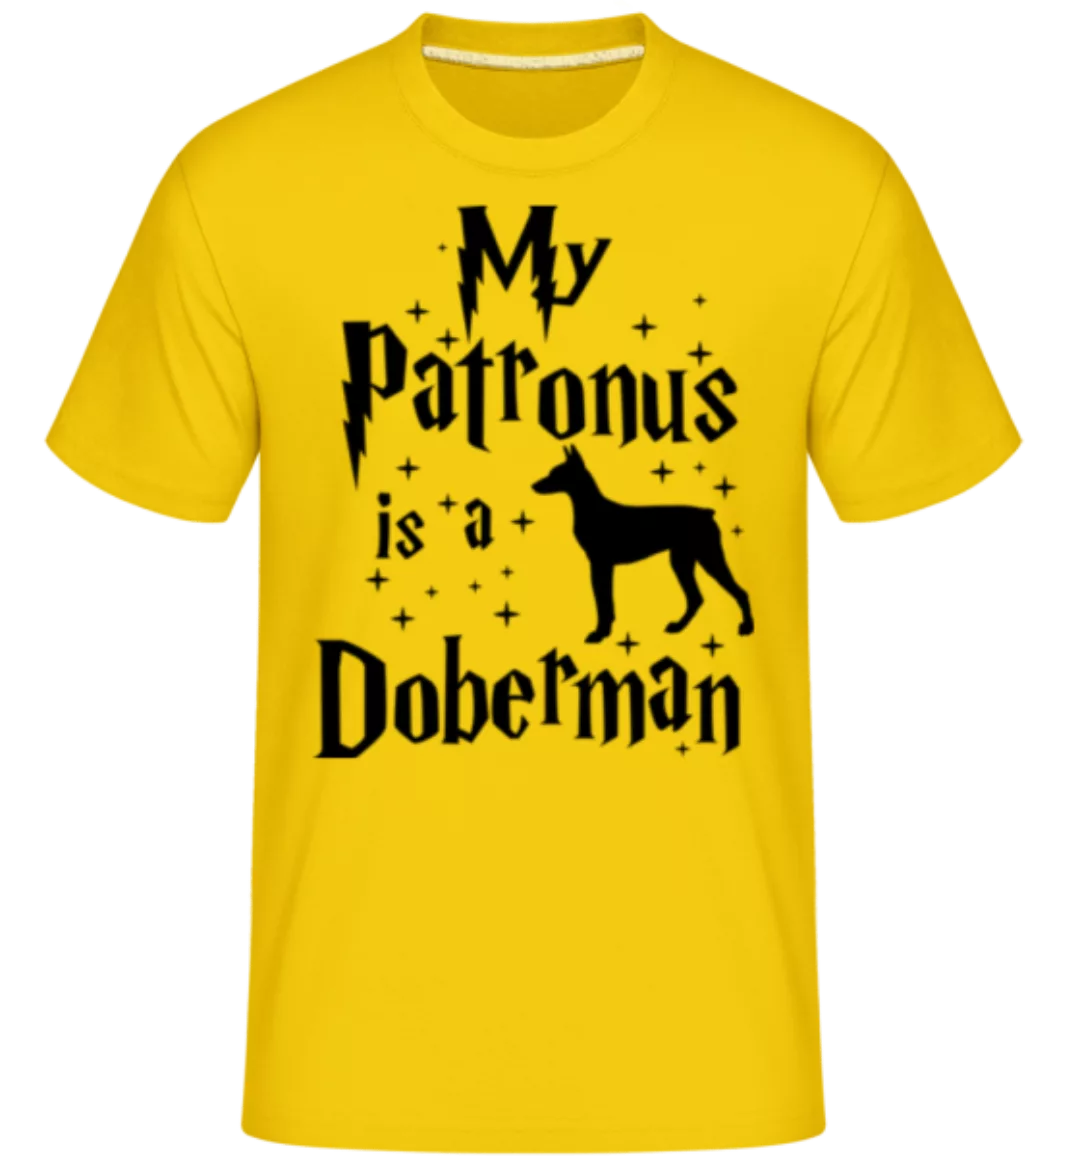 My Patronus Is A Doberman · Shirtinator Männer T-Shirt günstig online kaufen